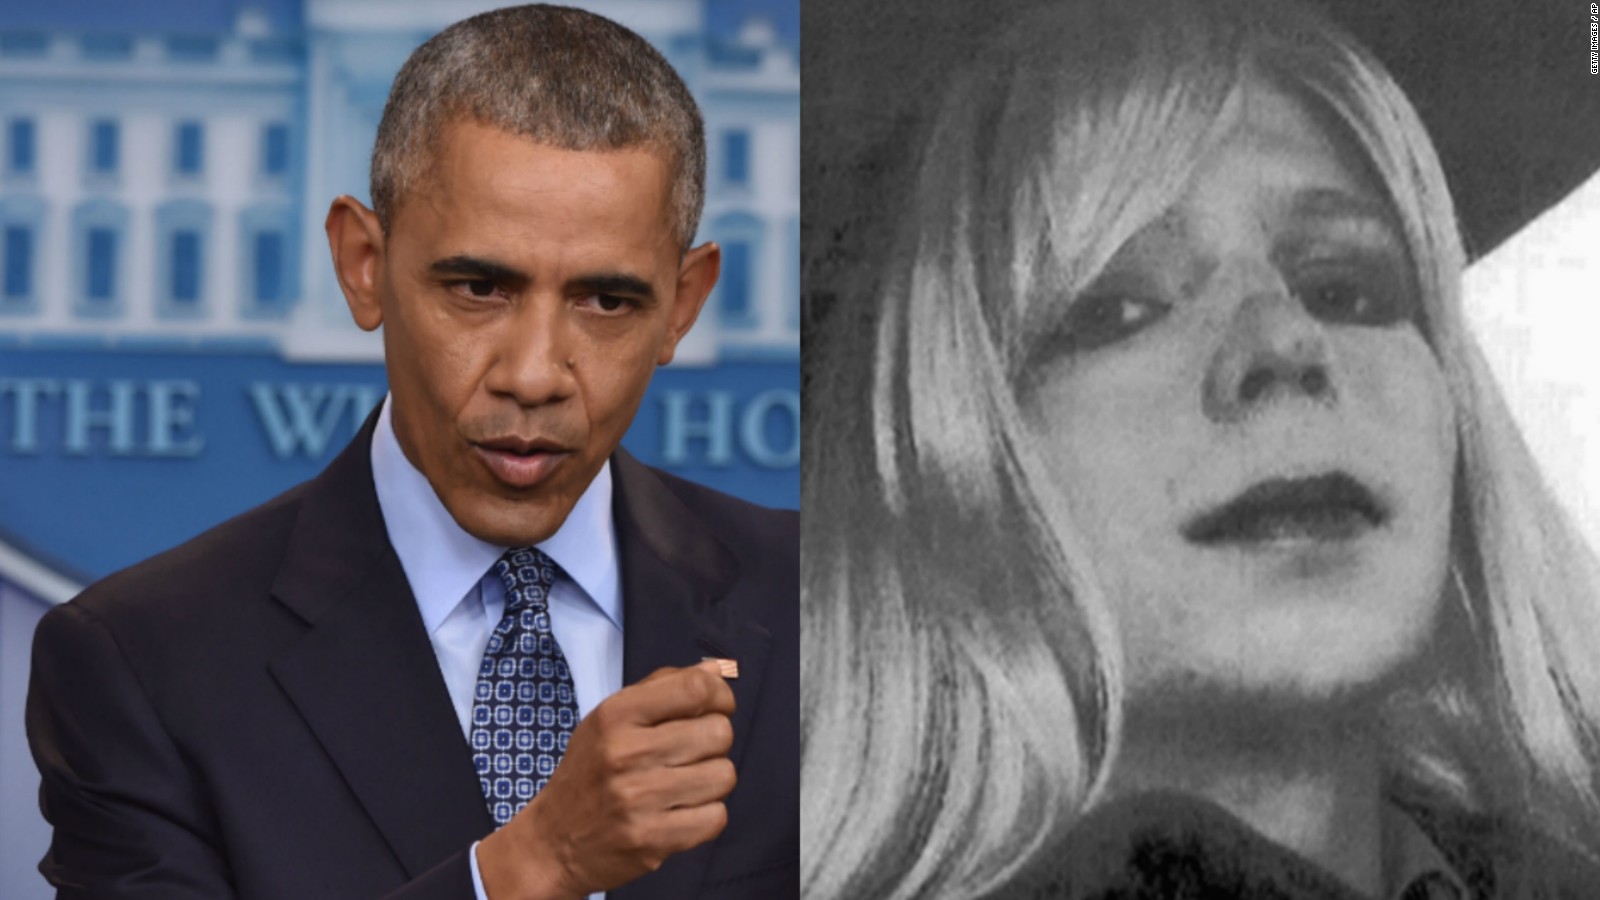 Obama Sentencia A Chelsea Manning Fue Desproporcionada Video Cnn 